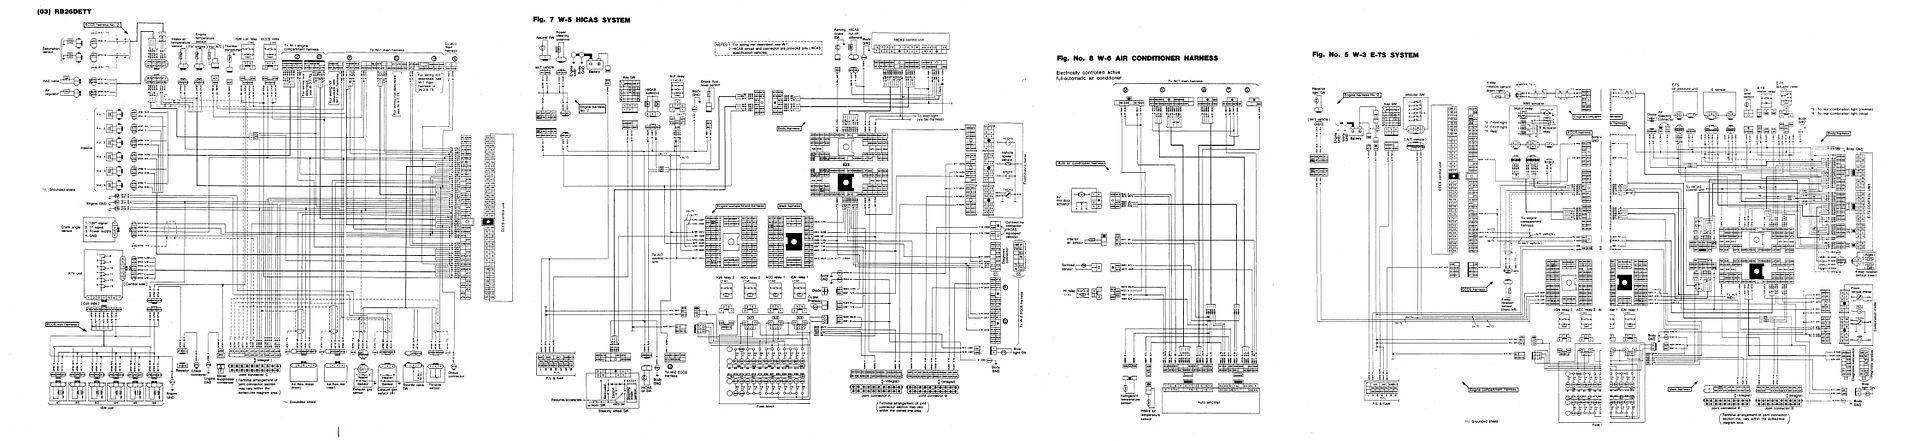 Nissan skyline r32 wiring diagram #6